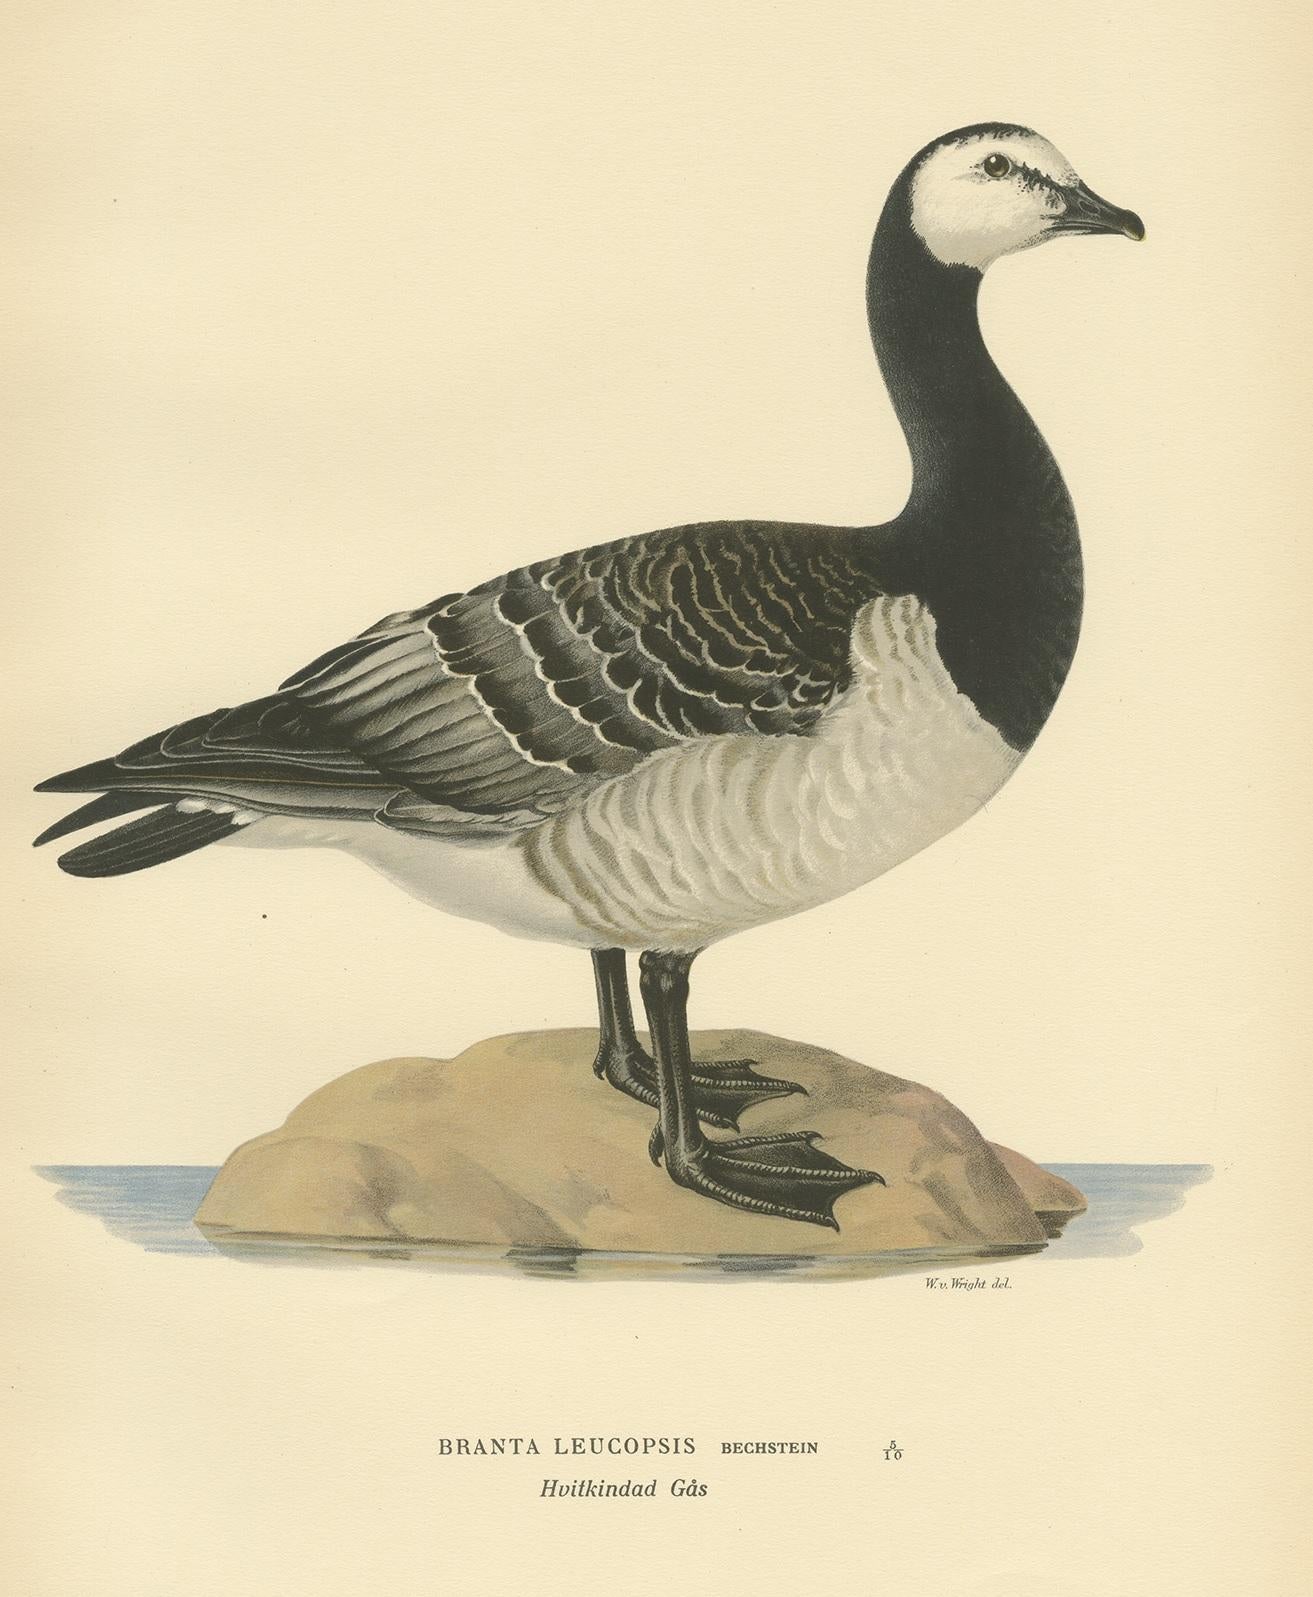 Antique bird print titled 'Branta Leucopsis'. Old bird print depicting the barnacle goose. This print originates from 'Svenska Foglar Efter Naturen Och Pa Stenritade' by Magnus von Wright.